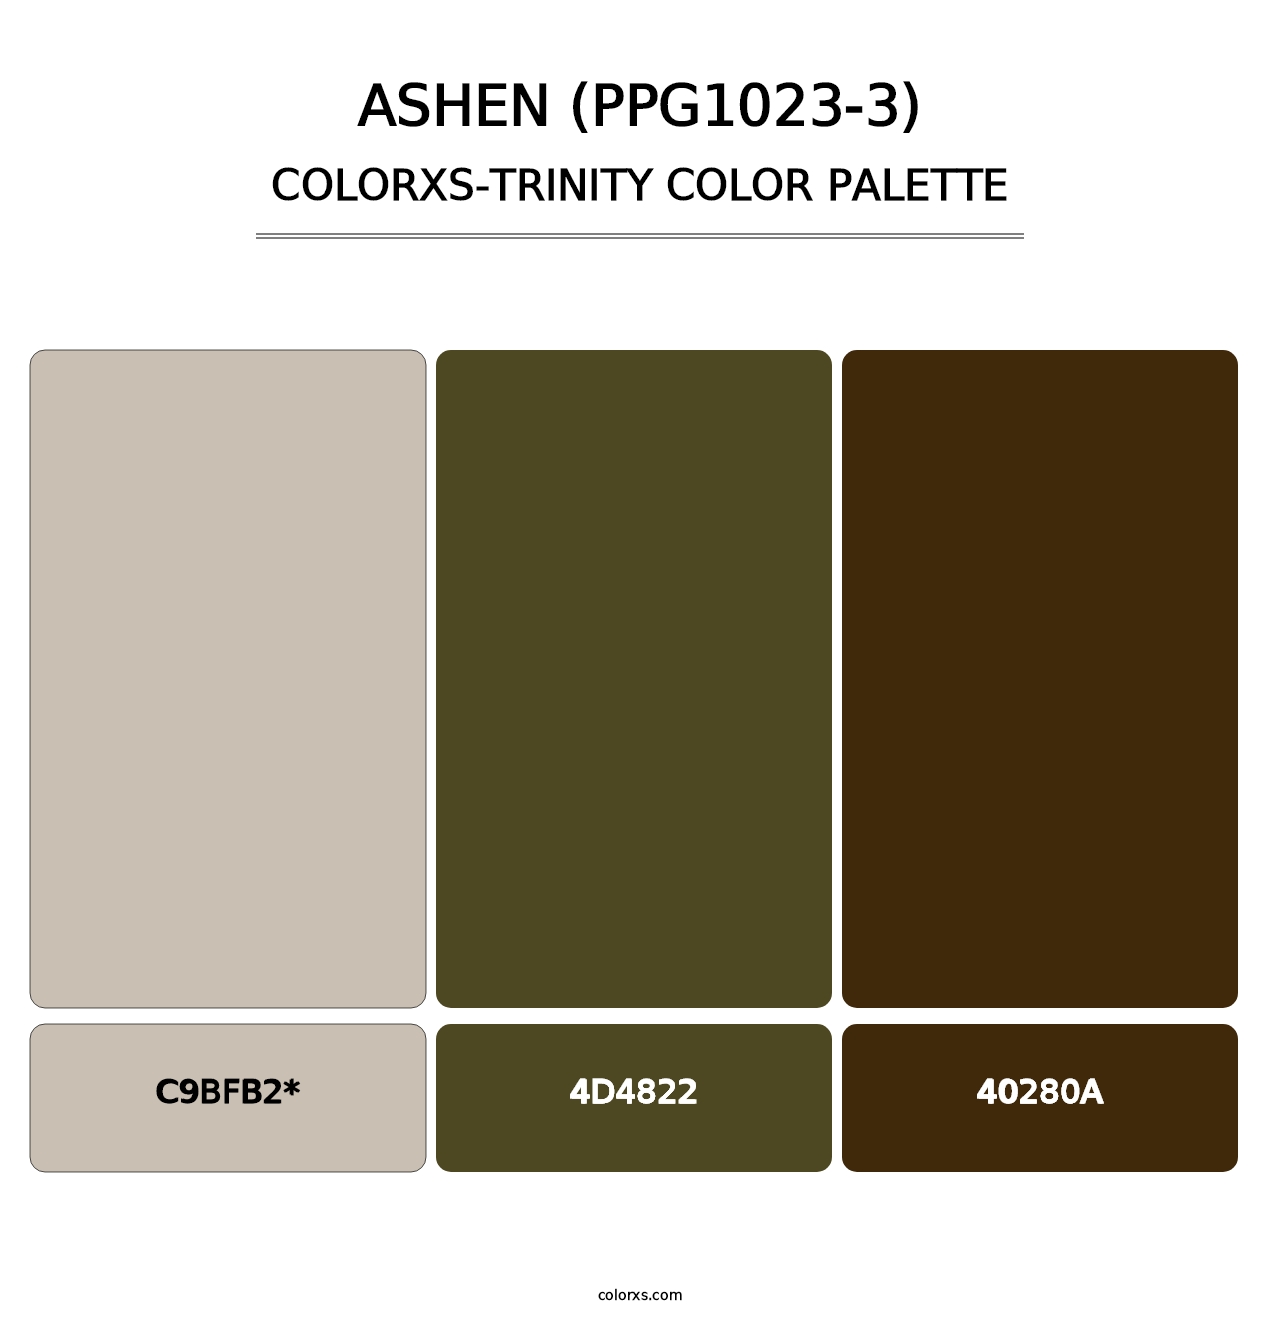 Ashen (PPG1023-3) - Colorxs Trinity Palette